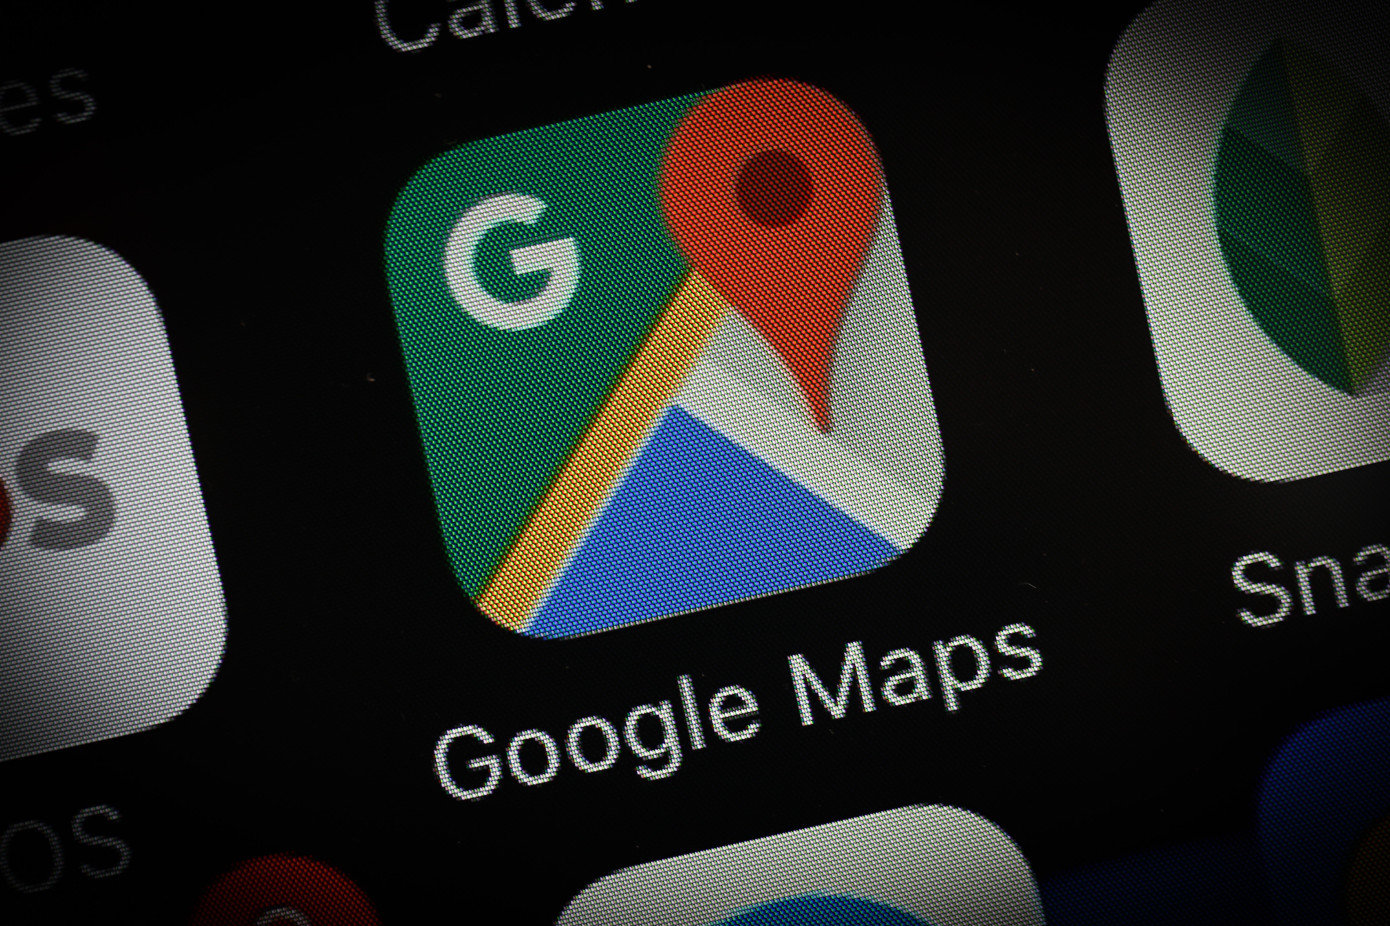 Tα Google Maps διευκολύνουν τον προγραμματισμό εξόδου μιας παρέας